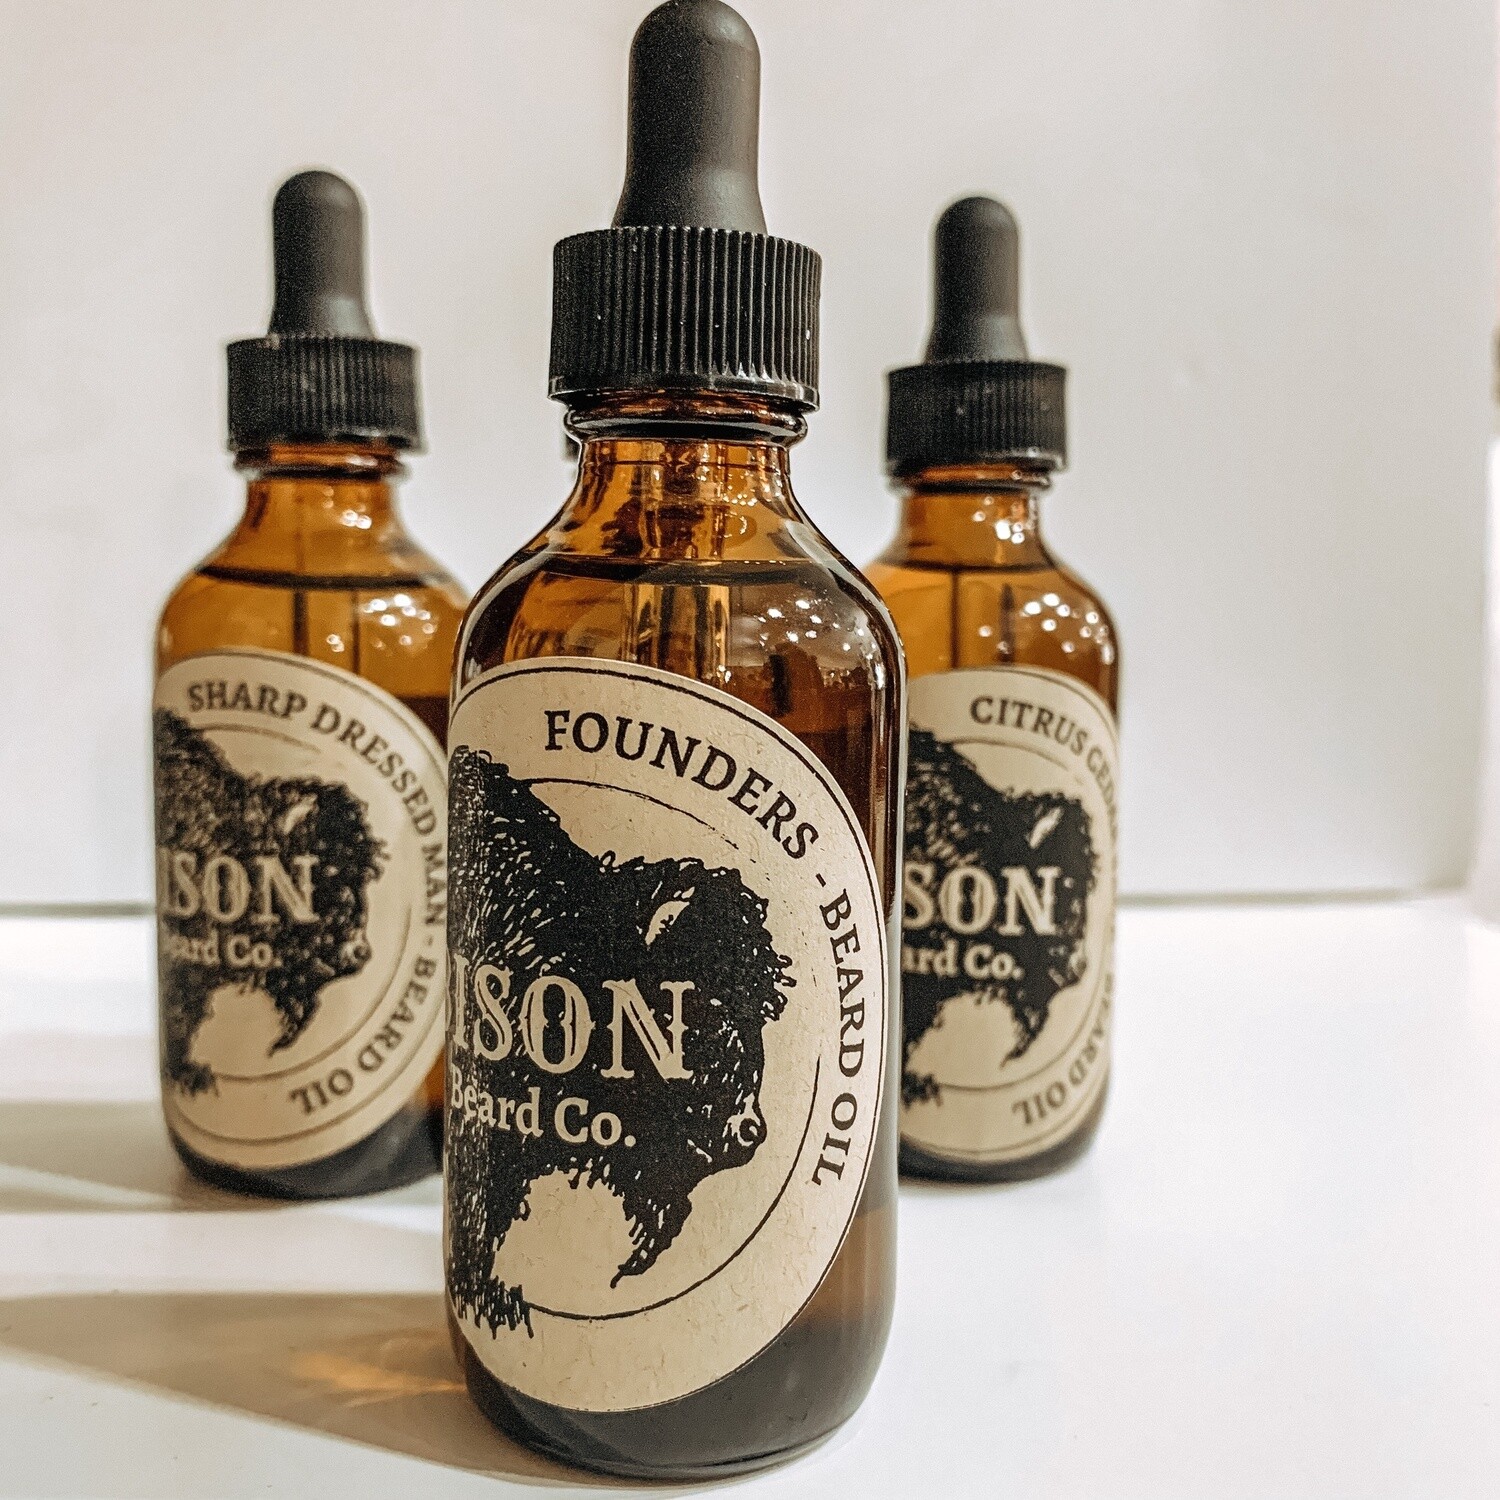 Bison Beard Oil